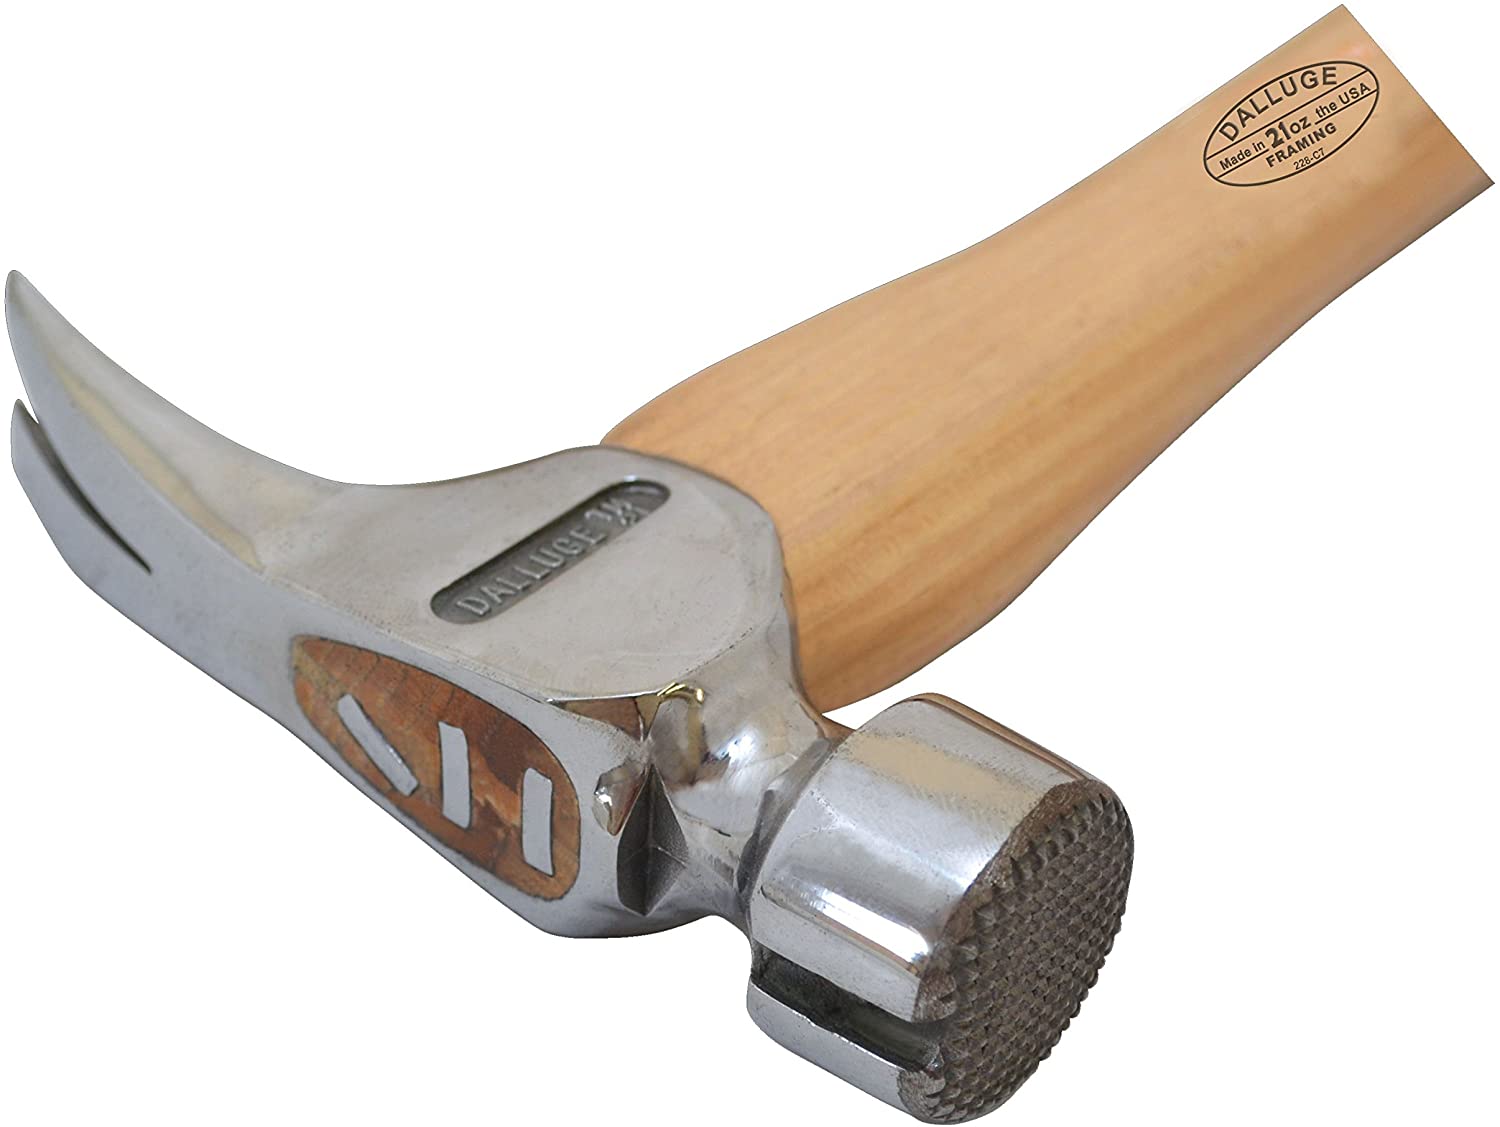 Dietzgen No 4209 Drafting Brush 14.5 in long, Wooden handle 100